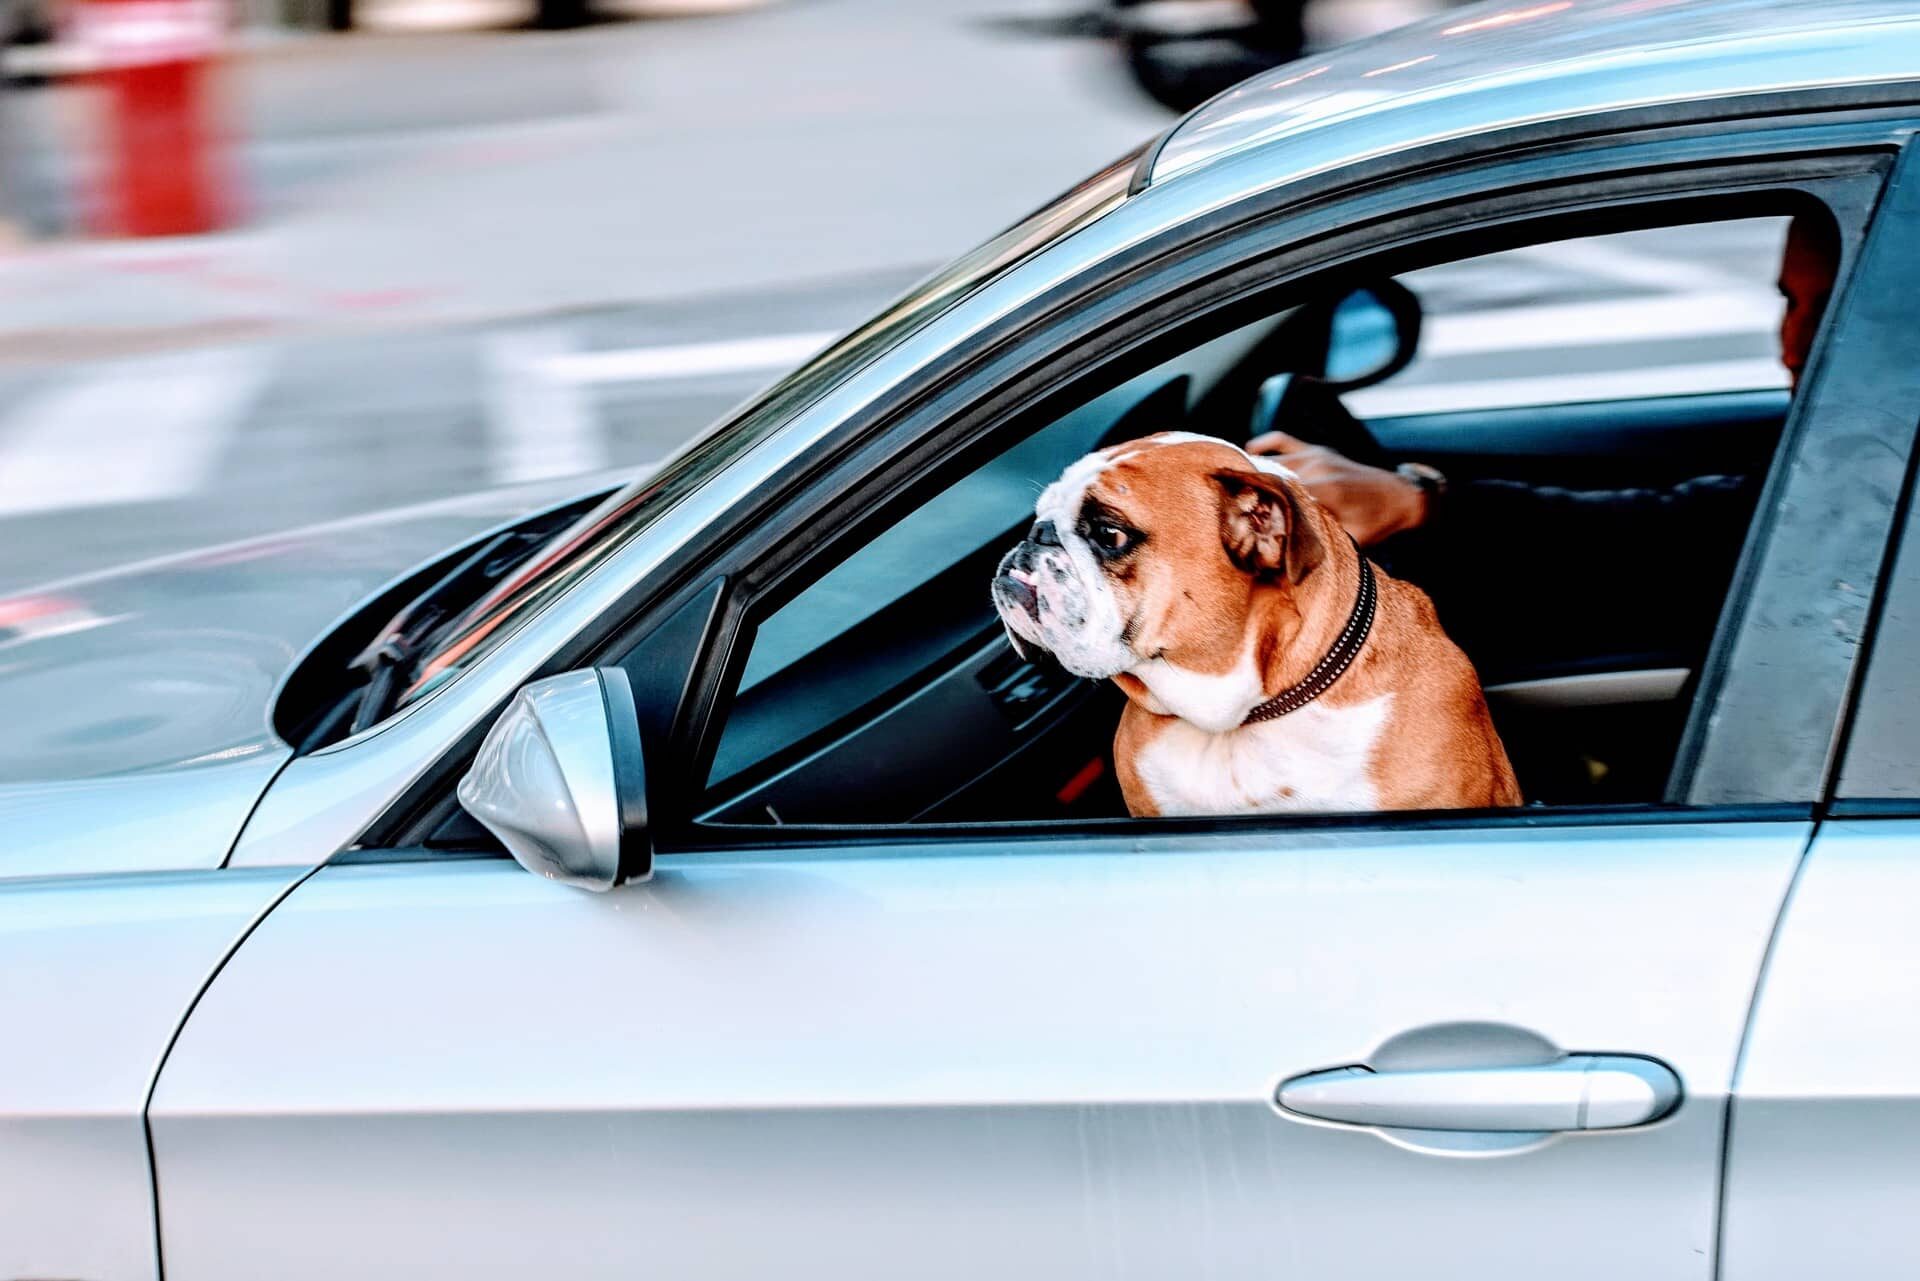 A happy pug dog enjoys a ride in a pet-proofed car.